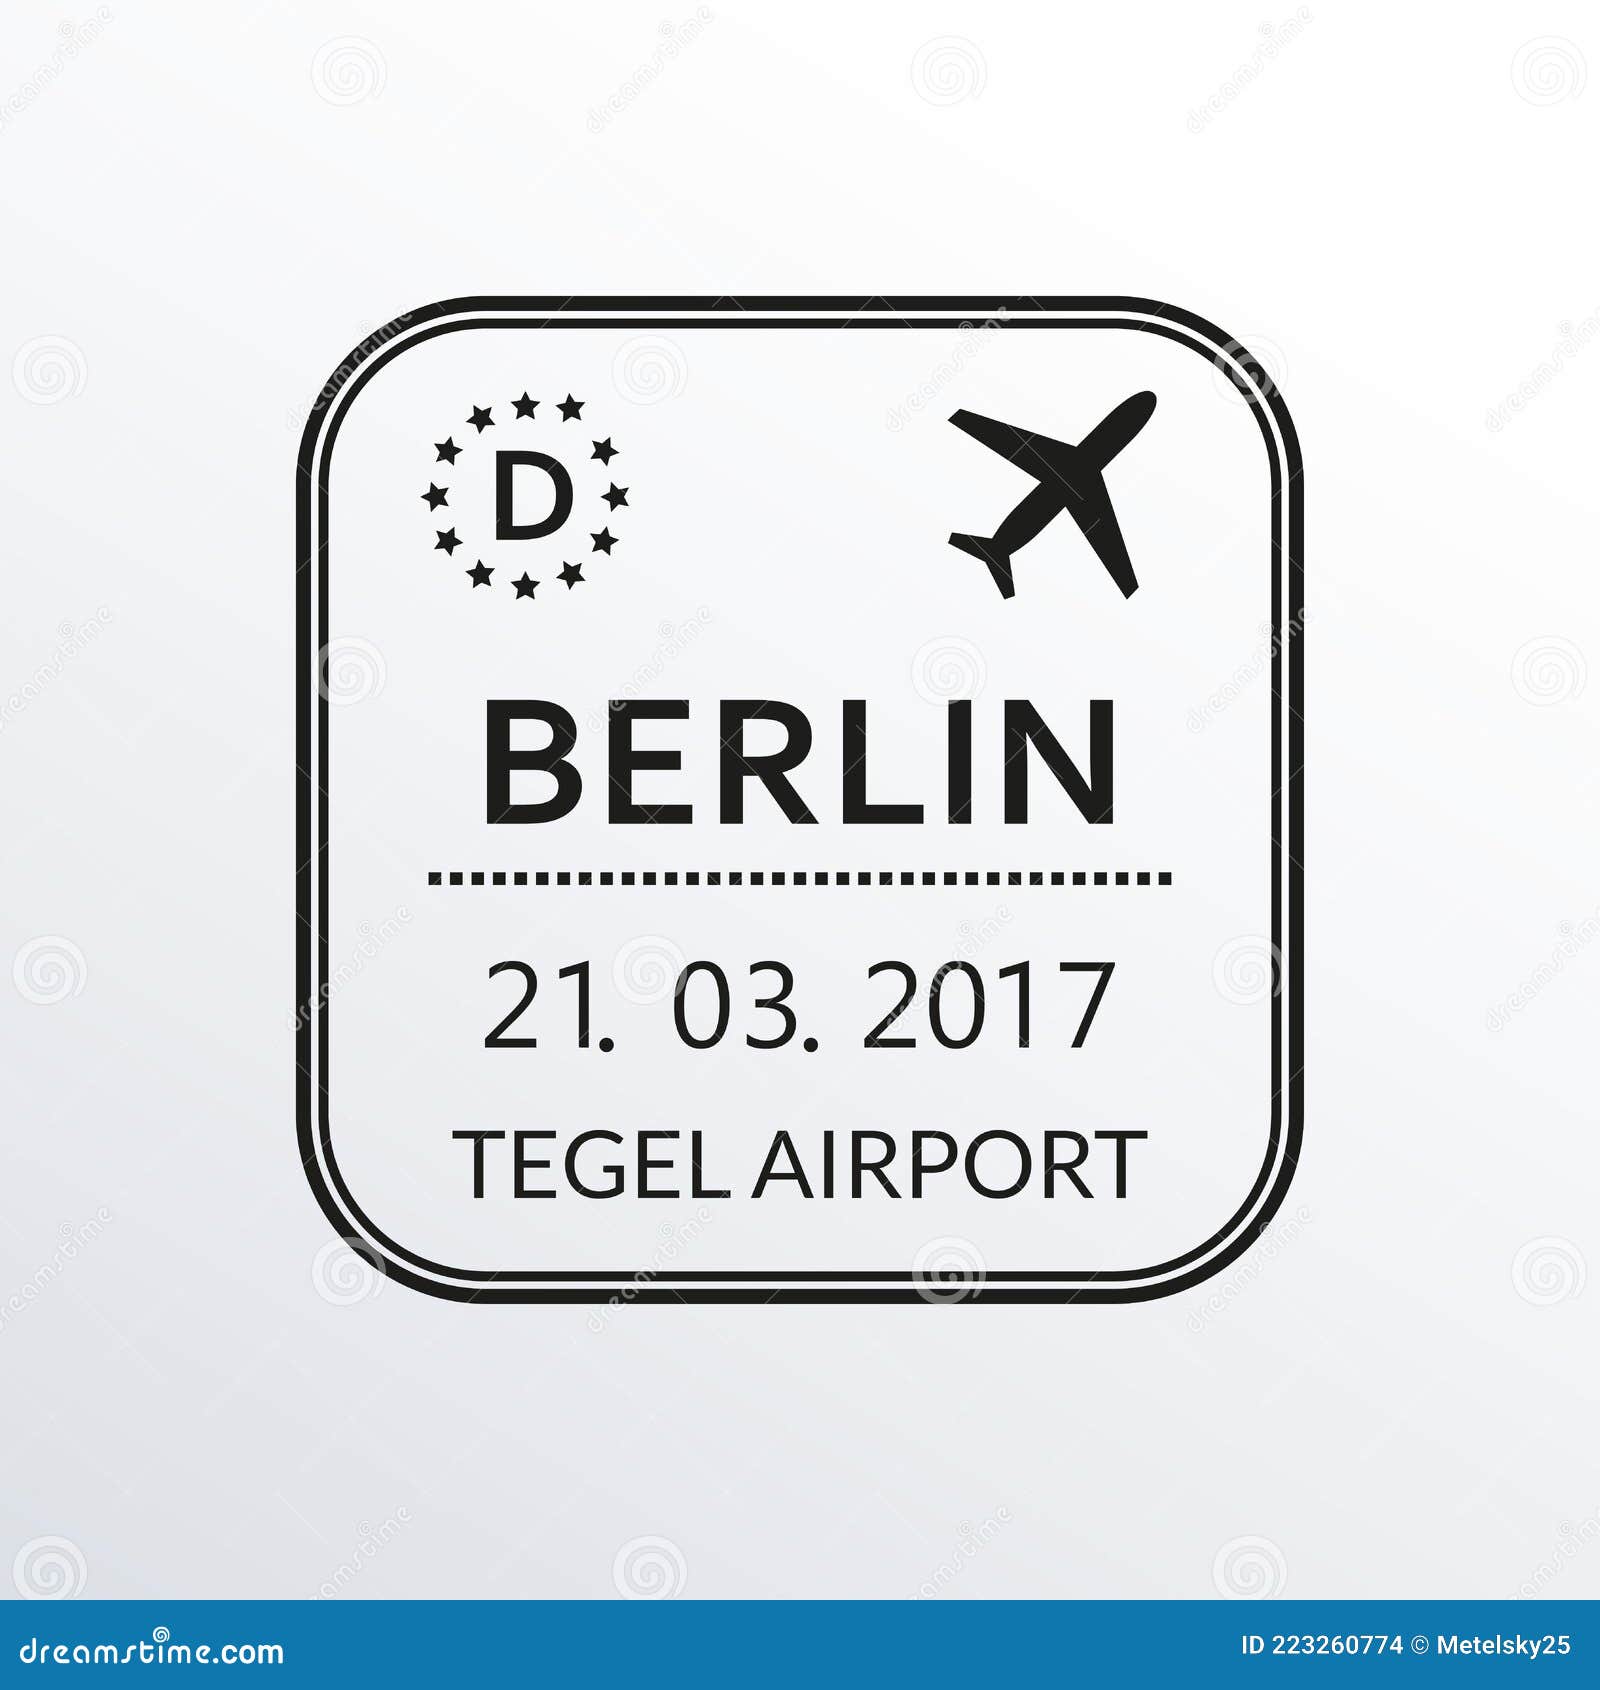 berlin passport stamp. germany airport visa stamp or immigration sign. custom control cachet.  .